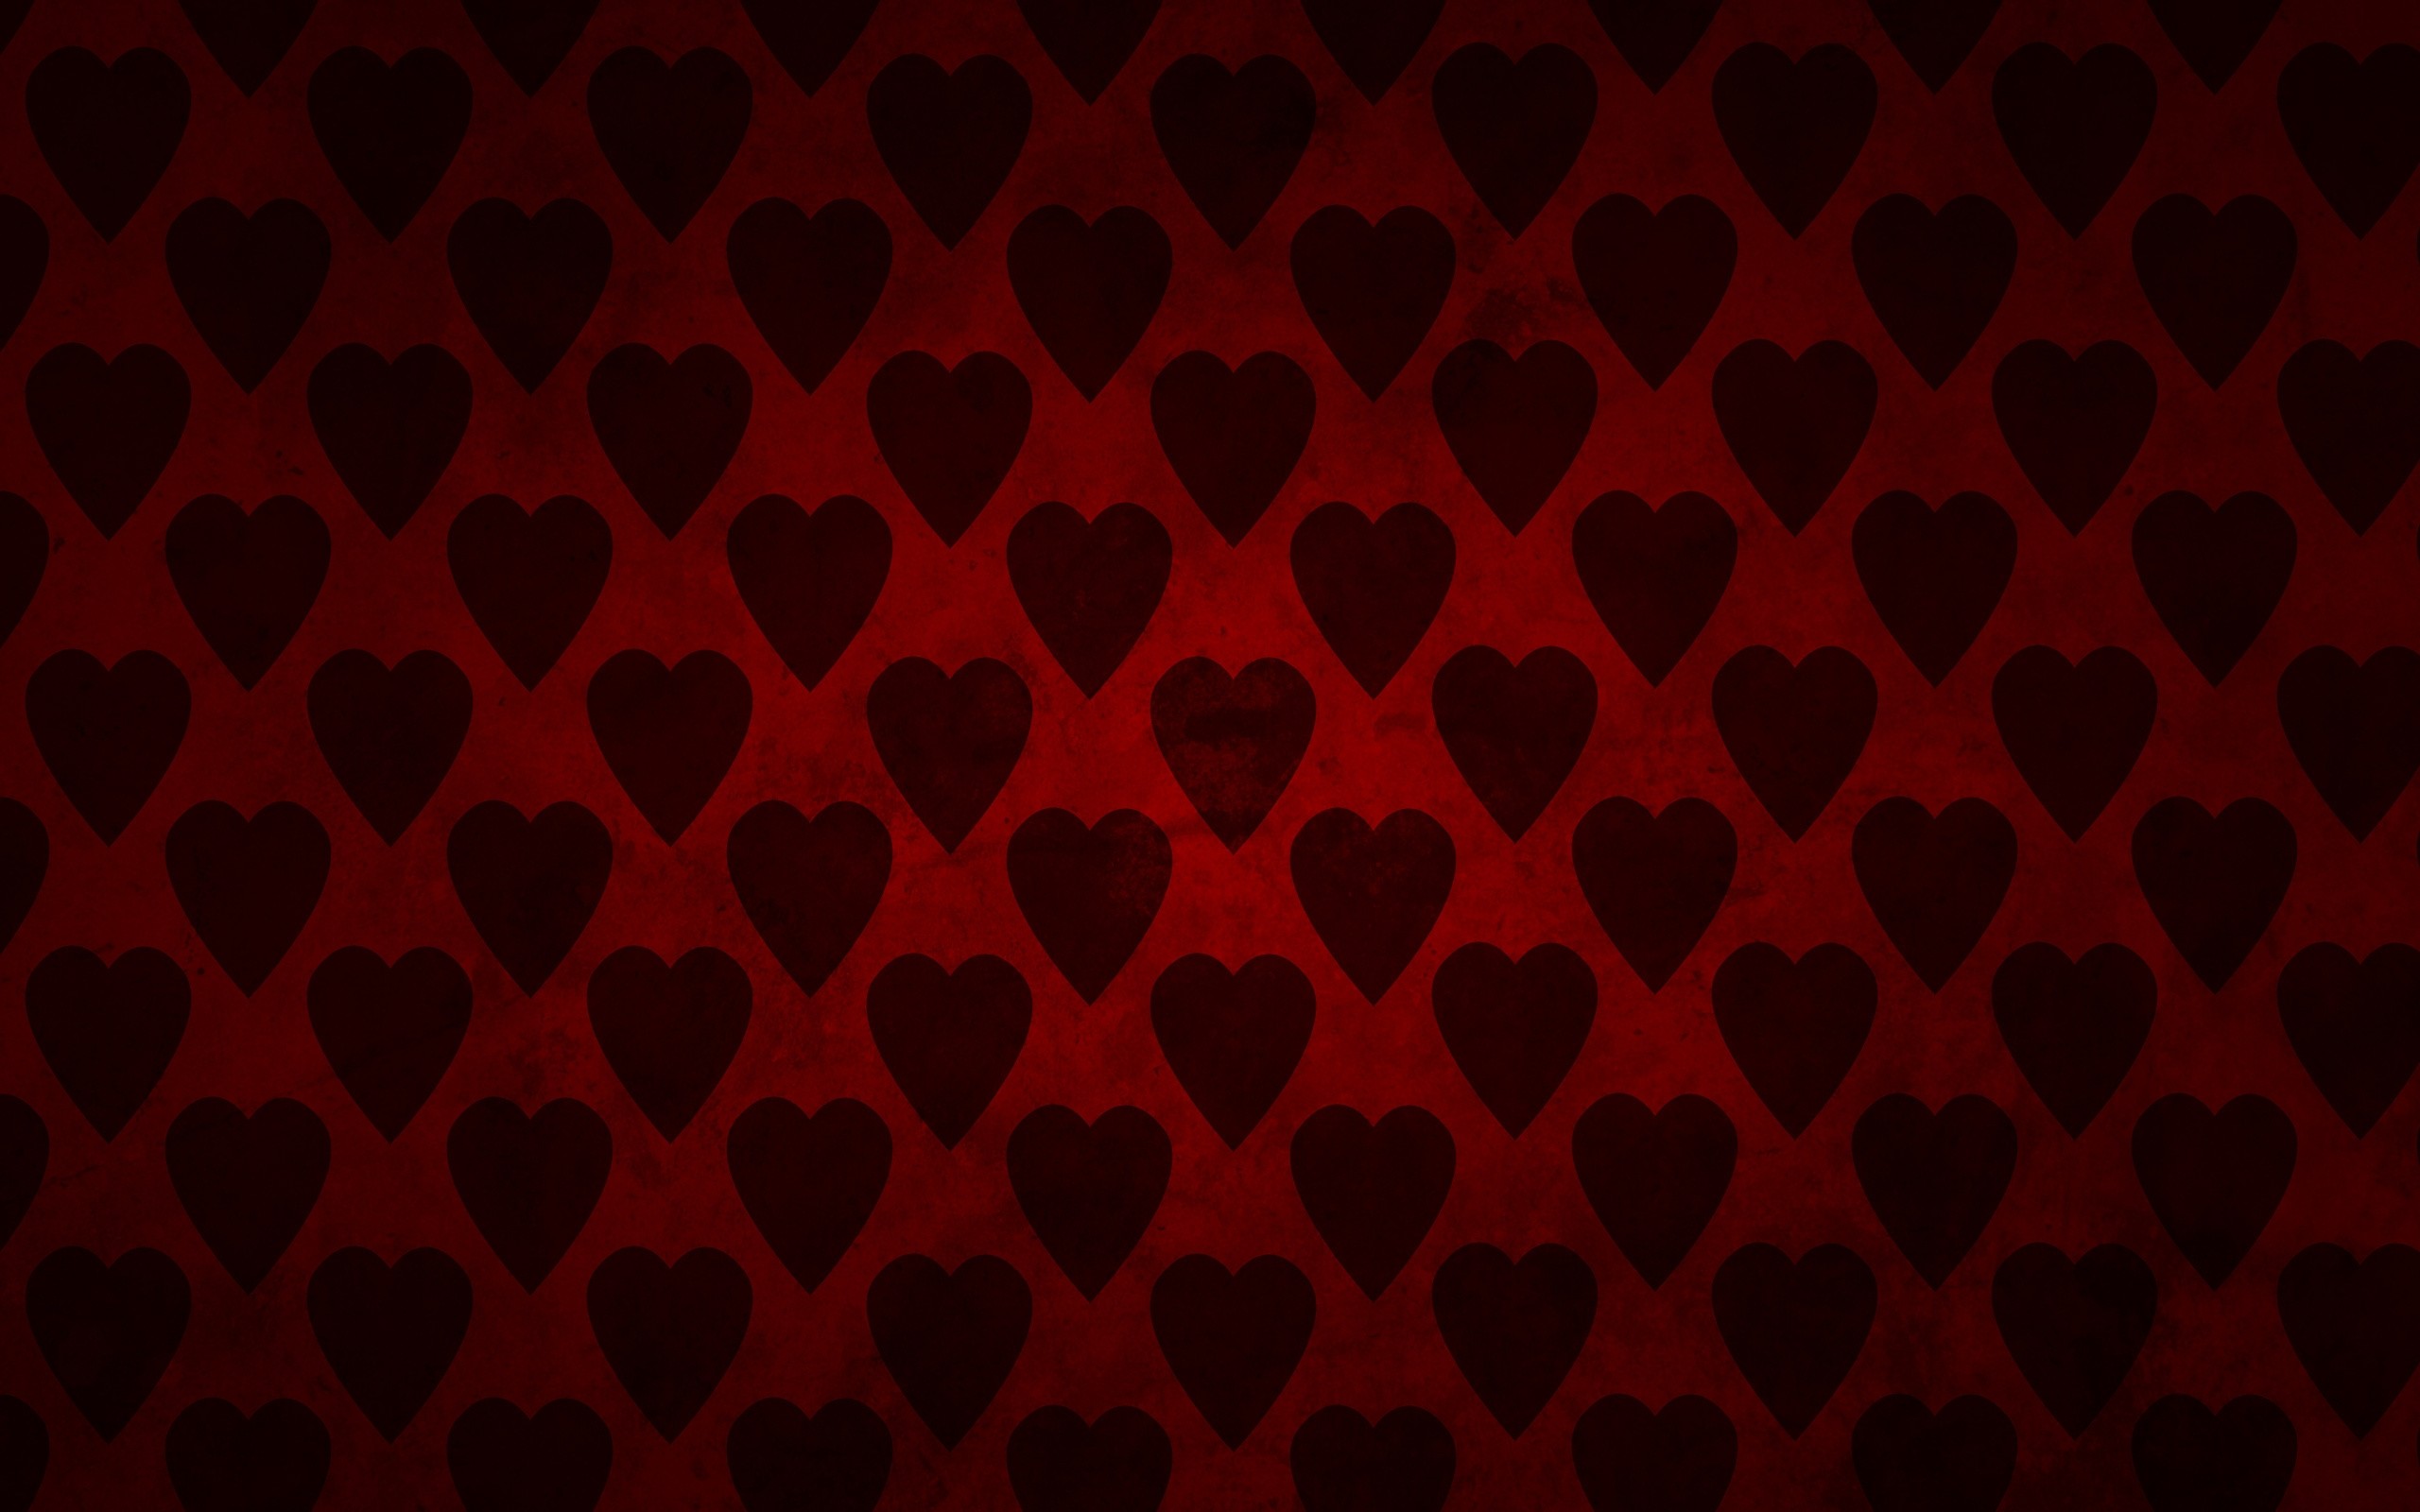 Free download Queen of Heart wallpaper ForWallpapercom 2125x2124 for your  Desktop Mobile  Tablet  Explore 45 Queen of Hearts Wallpaper  Kingdom  Of Hearts Wallpaper Queen of Shadows Wallpaper Queen of Pain Wallpaper